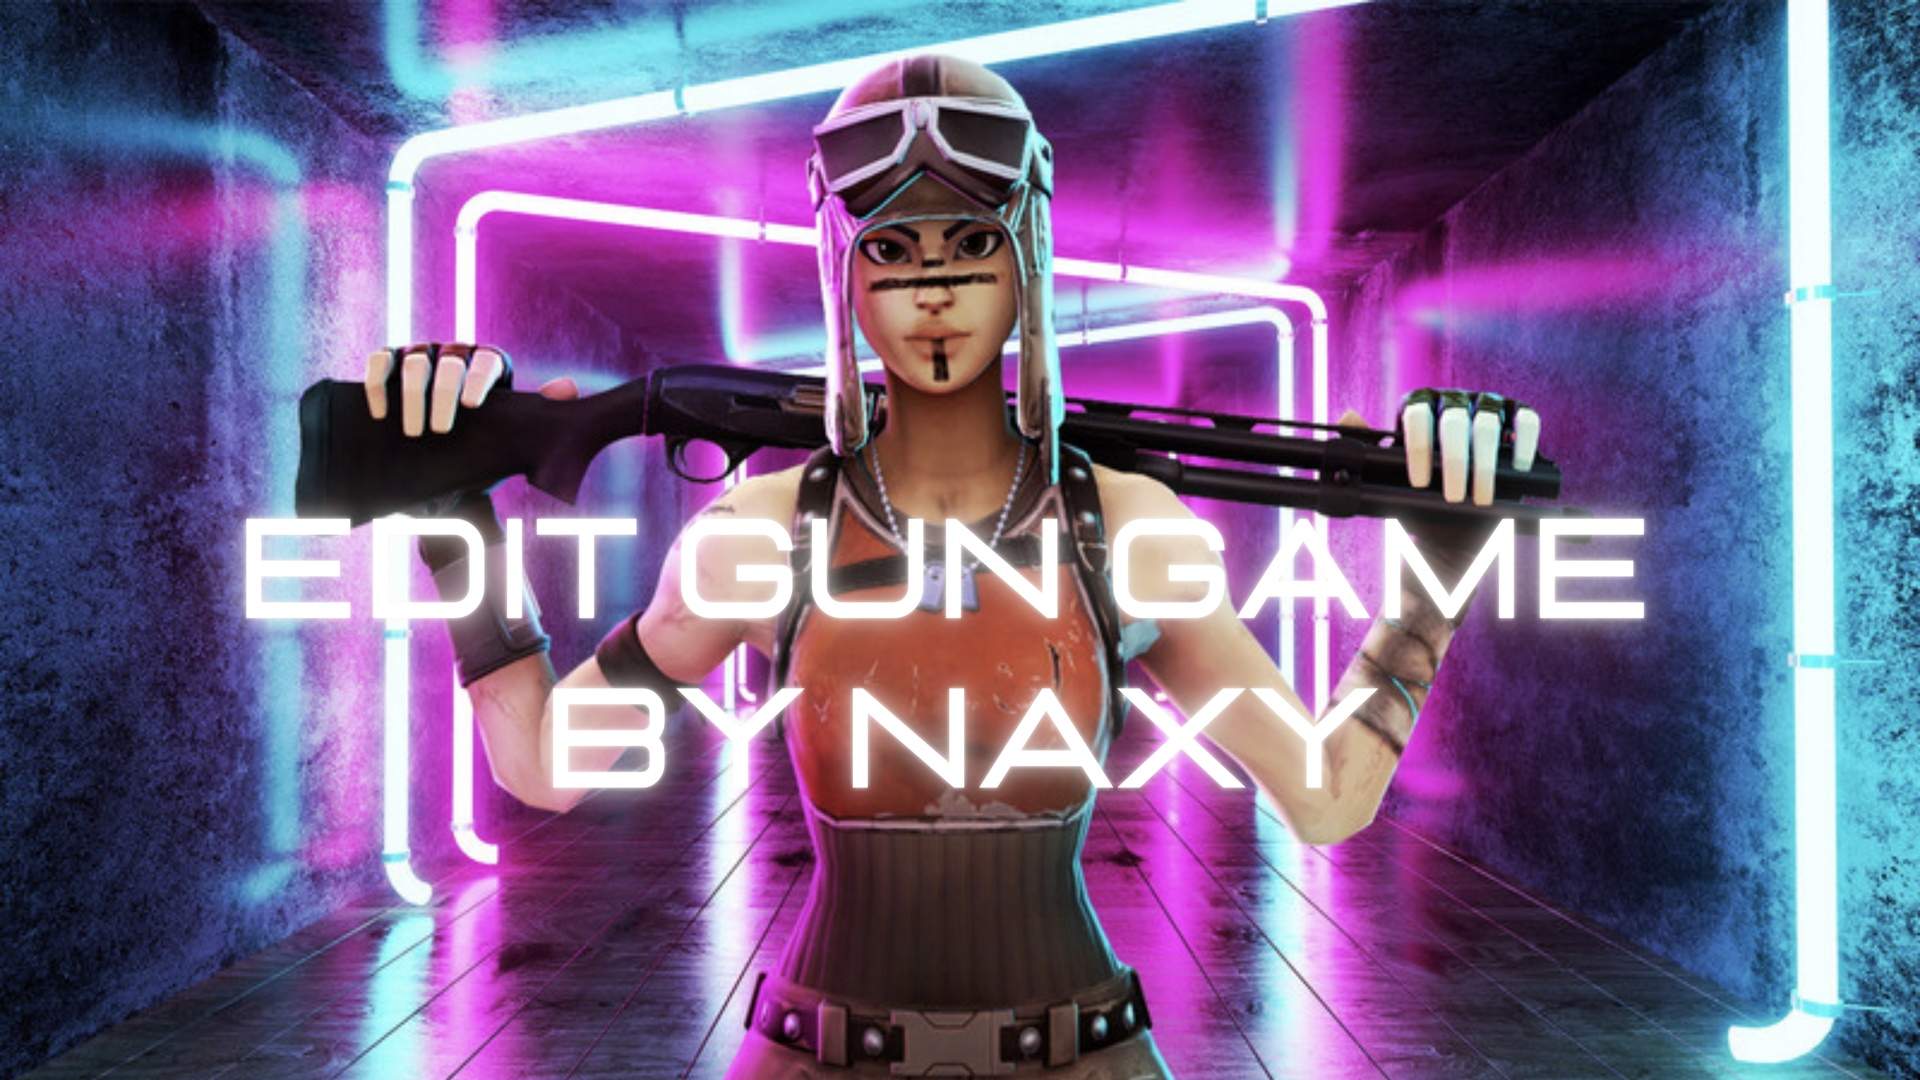 EDIT GUN GAME BY NAXY